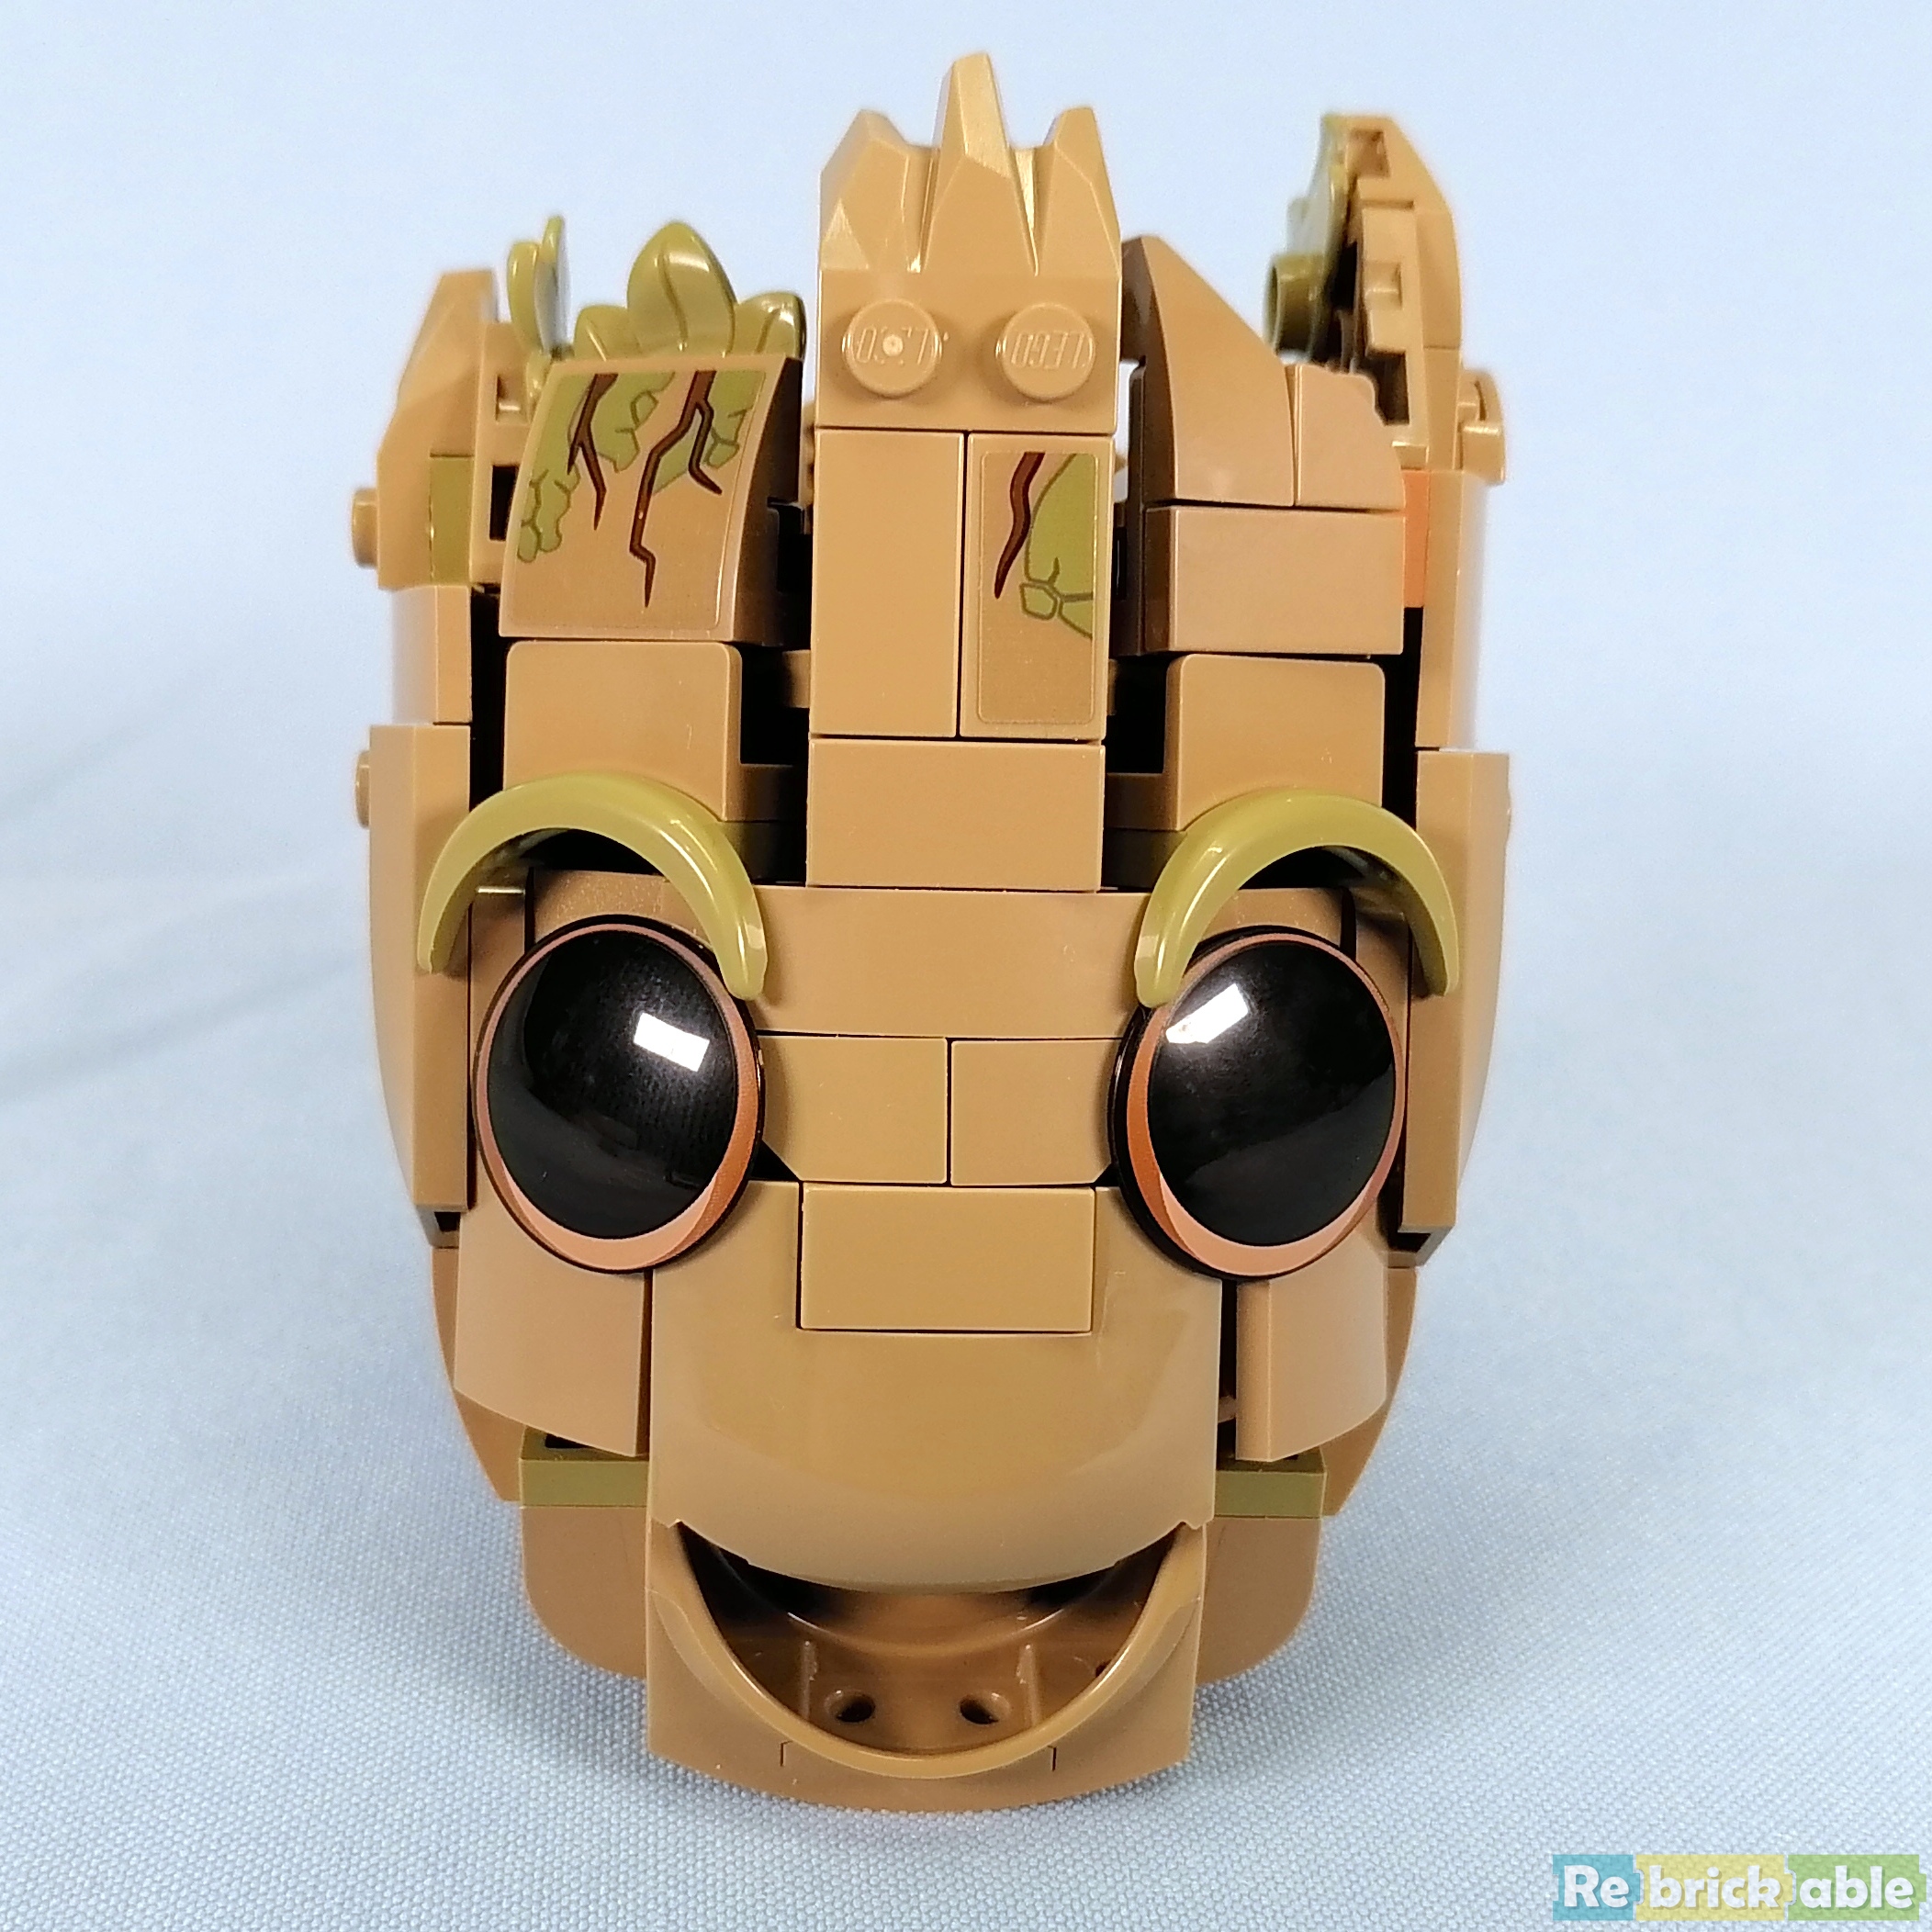 Review LEGO Marvel 76217 I Am Groot - HelloBricks